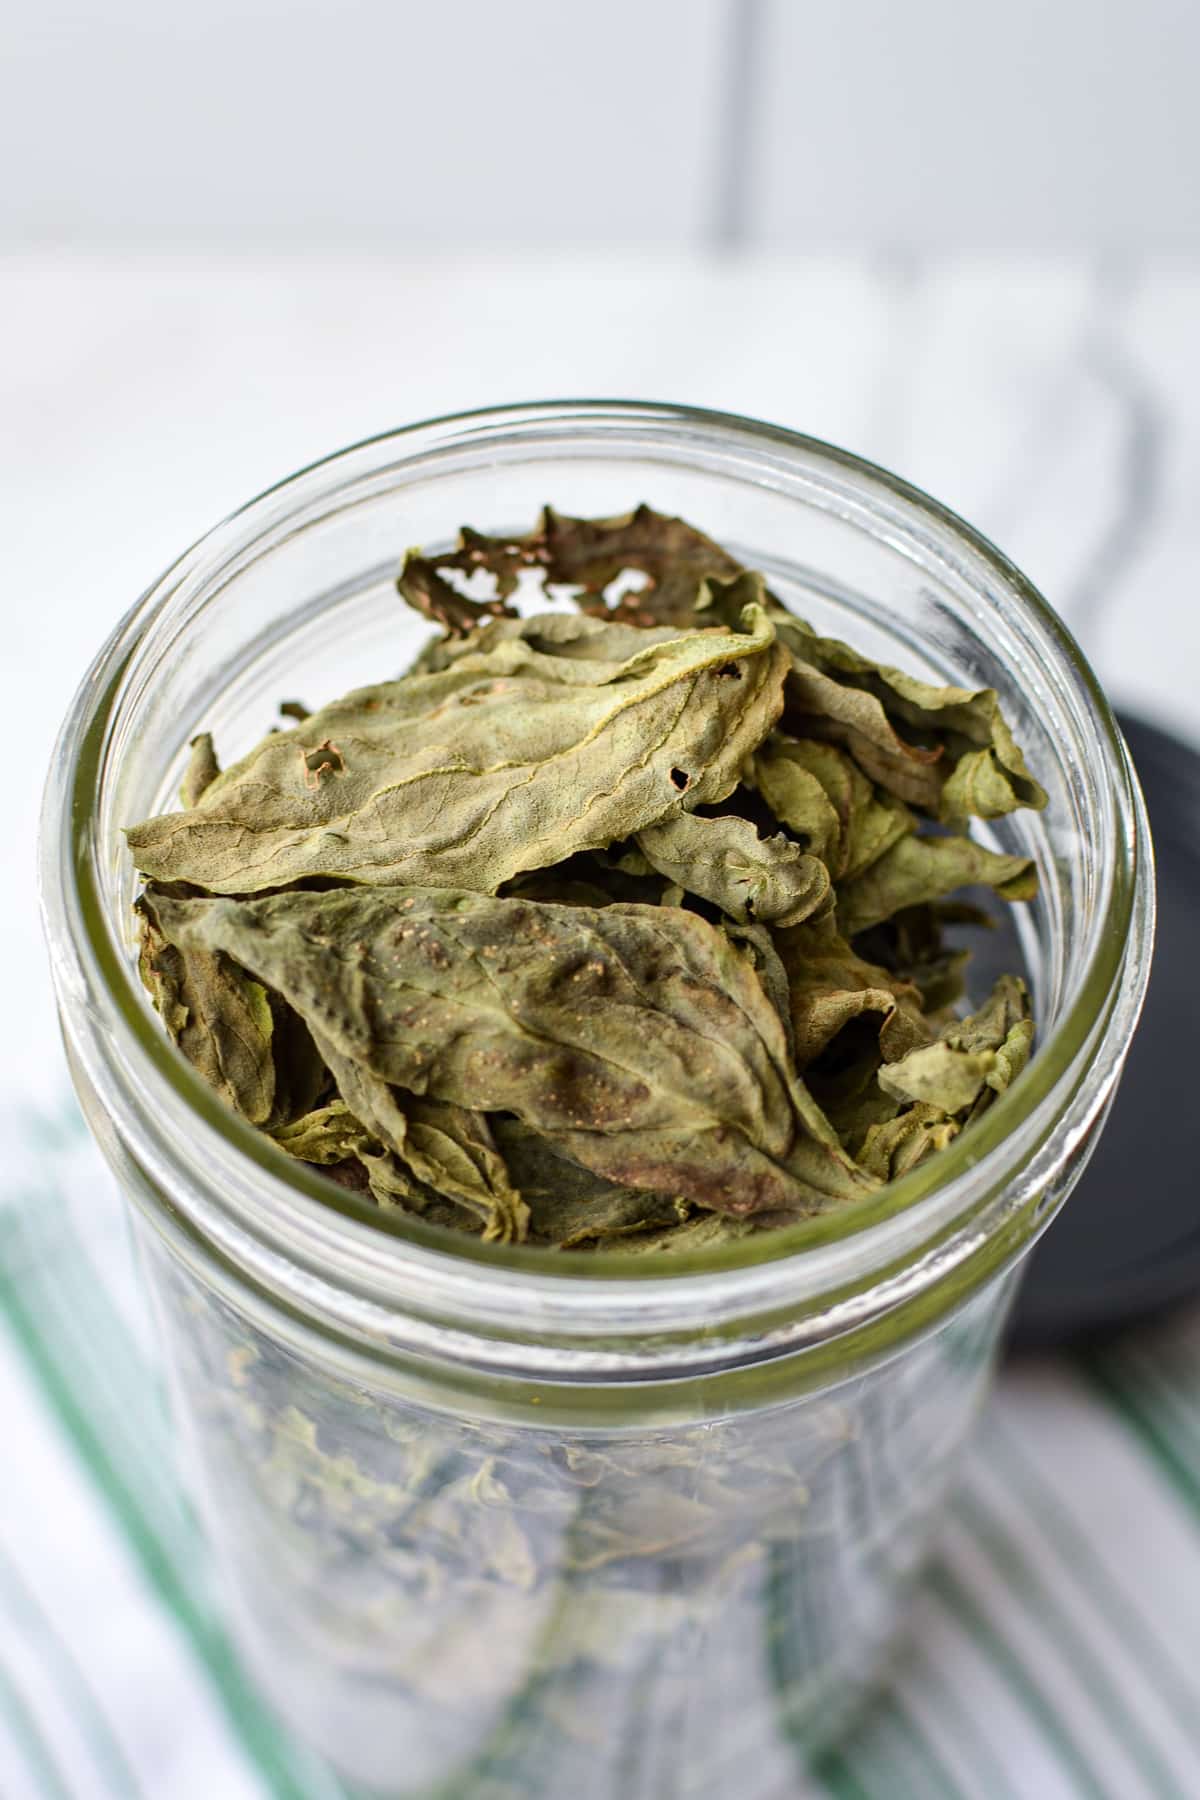 A jar of dried basil leaves.